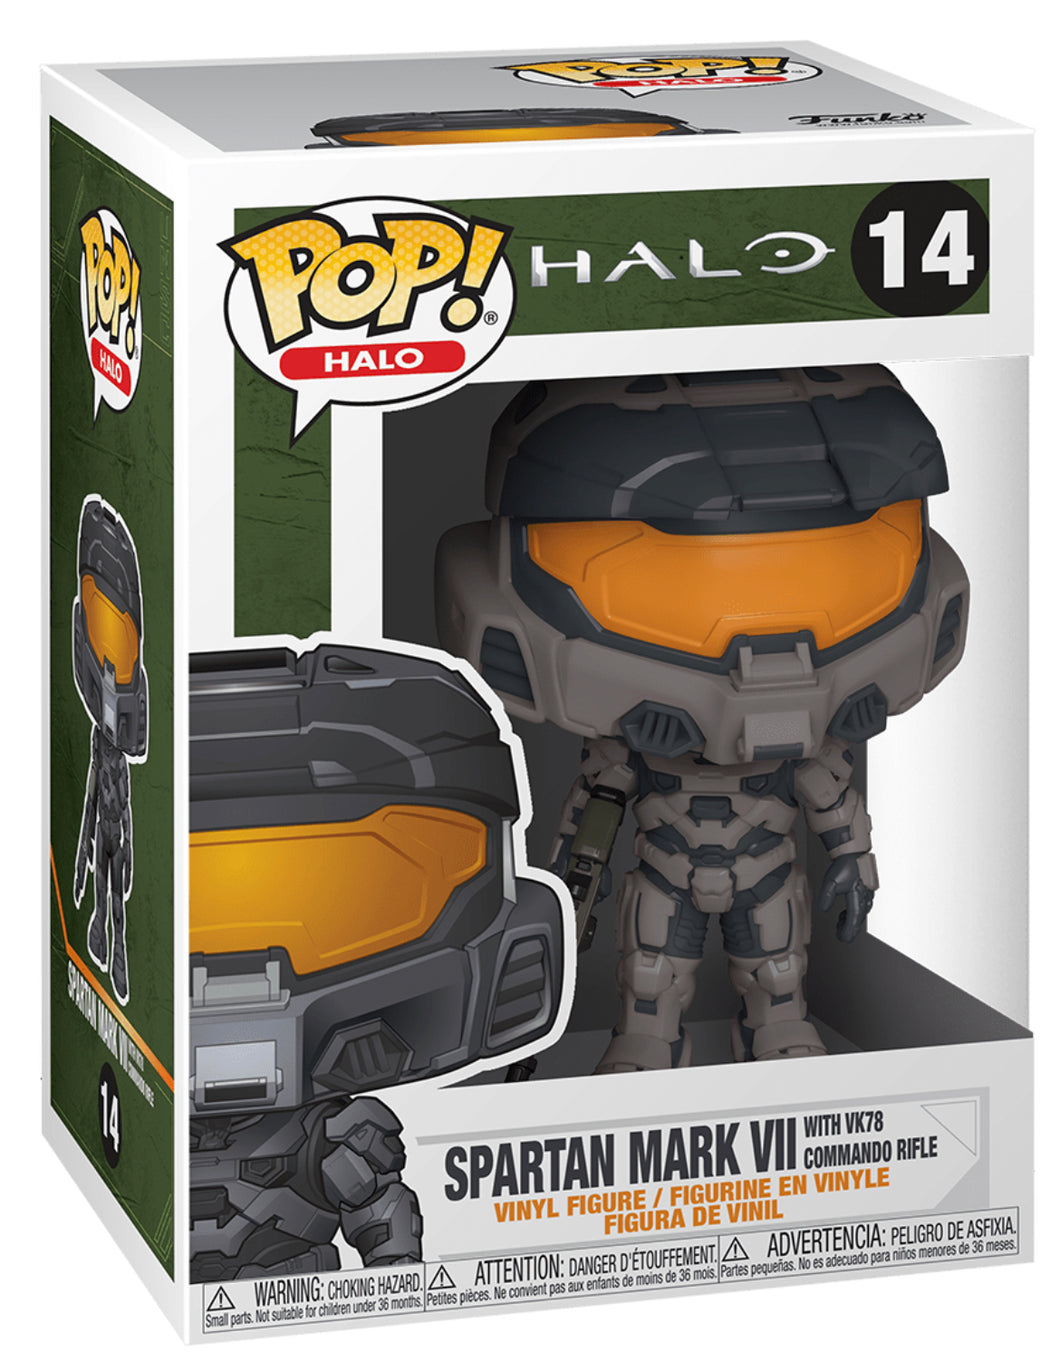 POP! Halo: 14 Halo, Spartan Mark VII w/ VK78 Commando Rifle